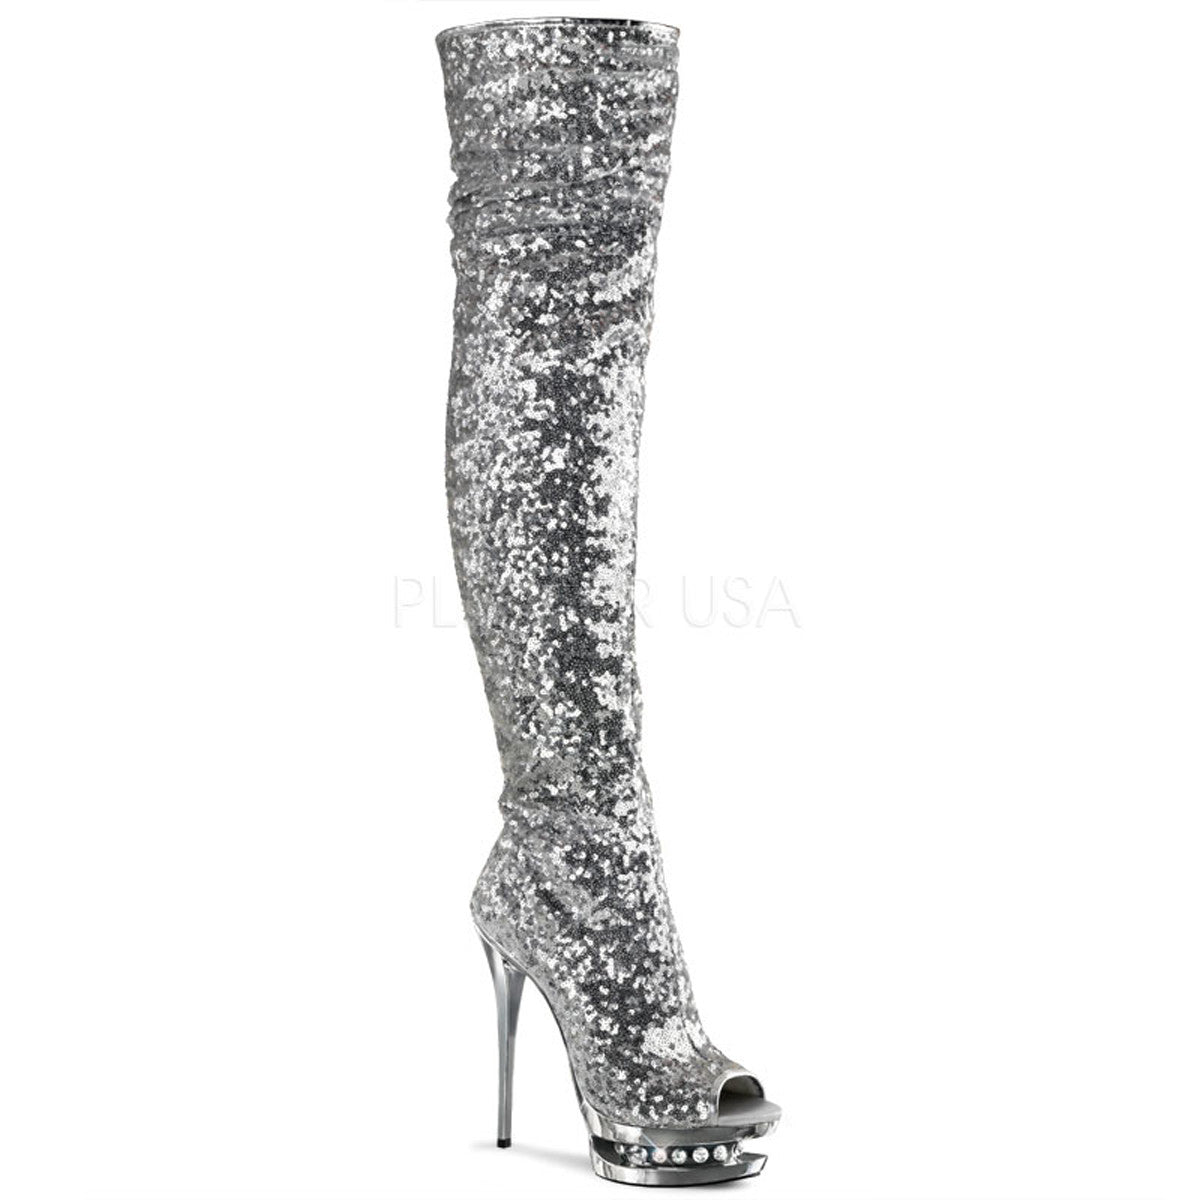 PLEASER BLONDIE-R-3011 Silver Sequins-Silver Chrome Knee High Boots - Shoecup.com - 1